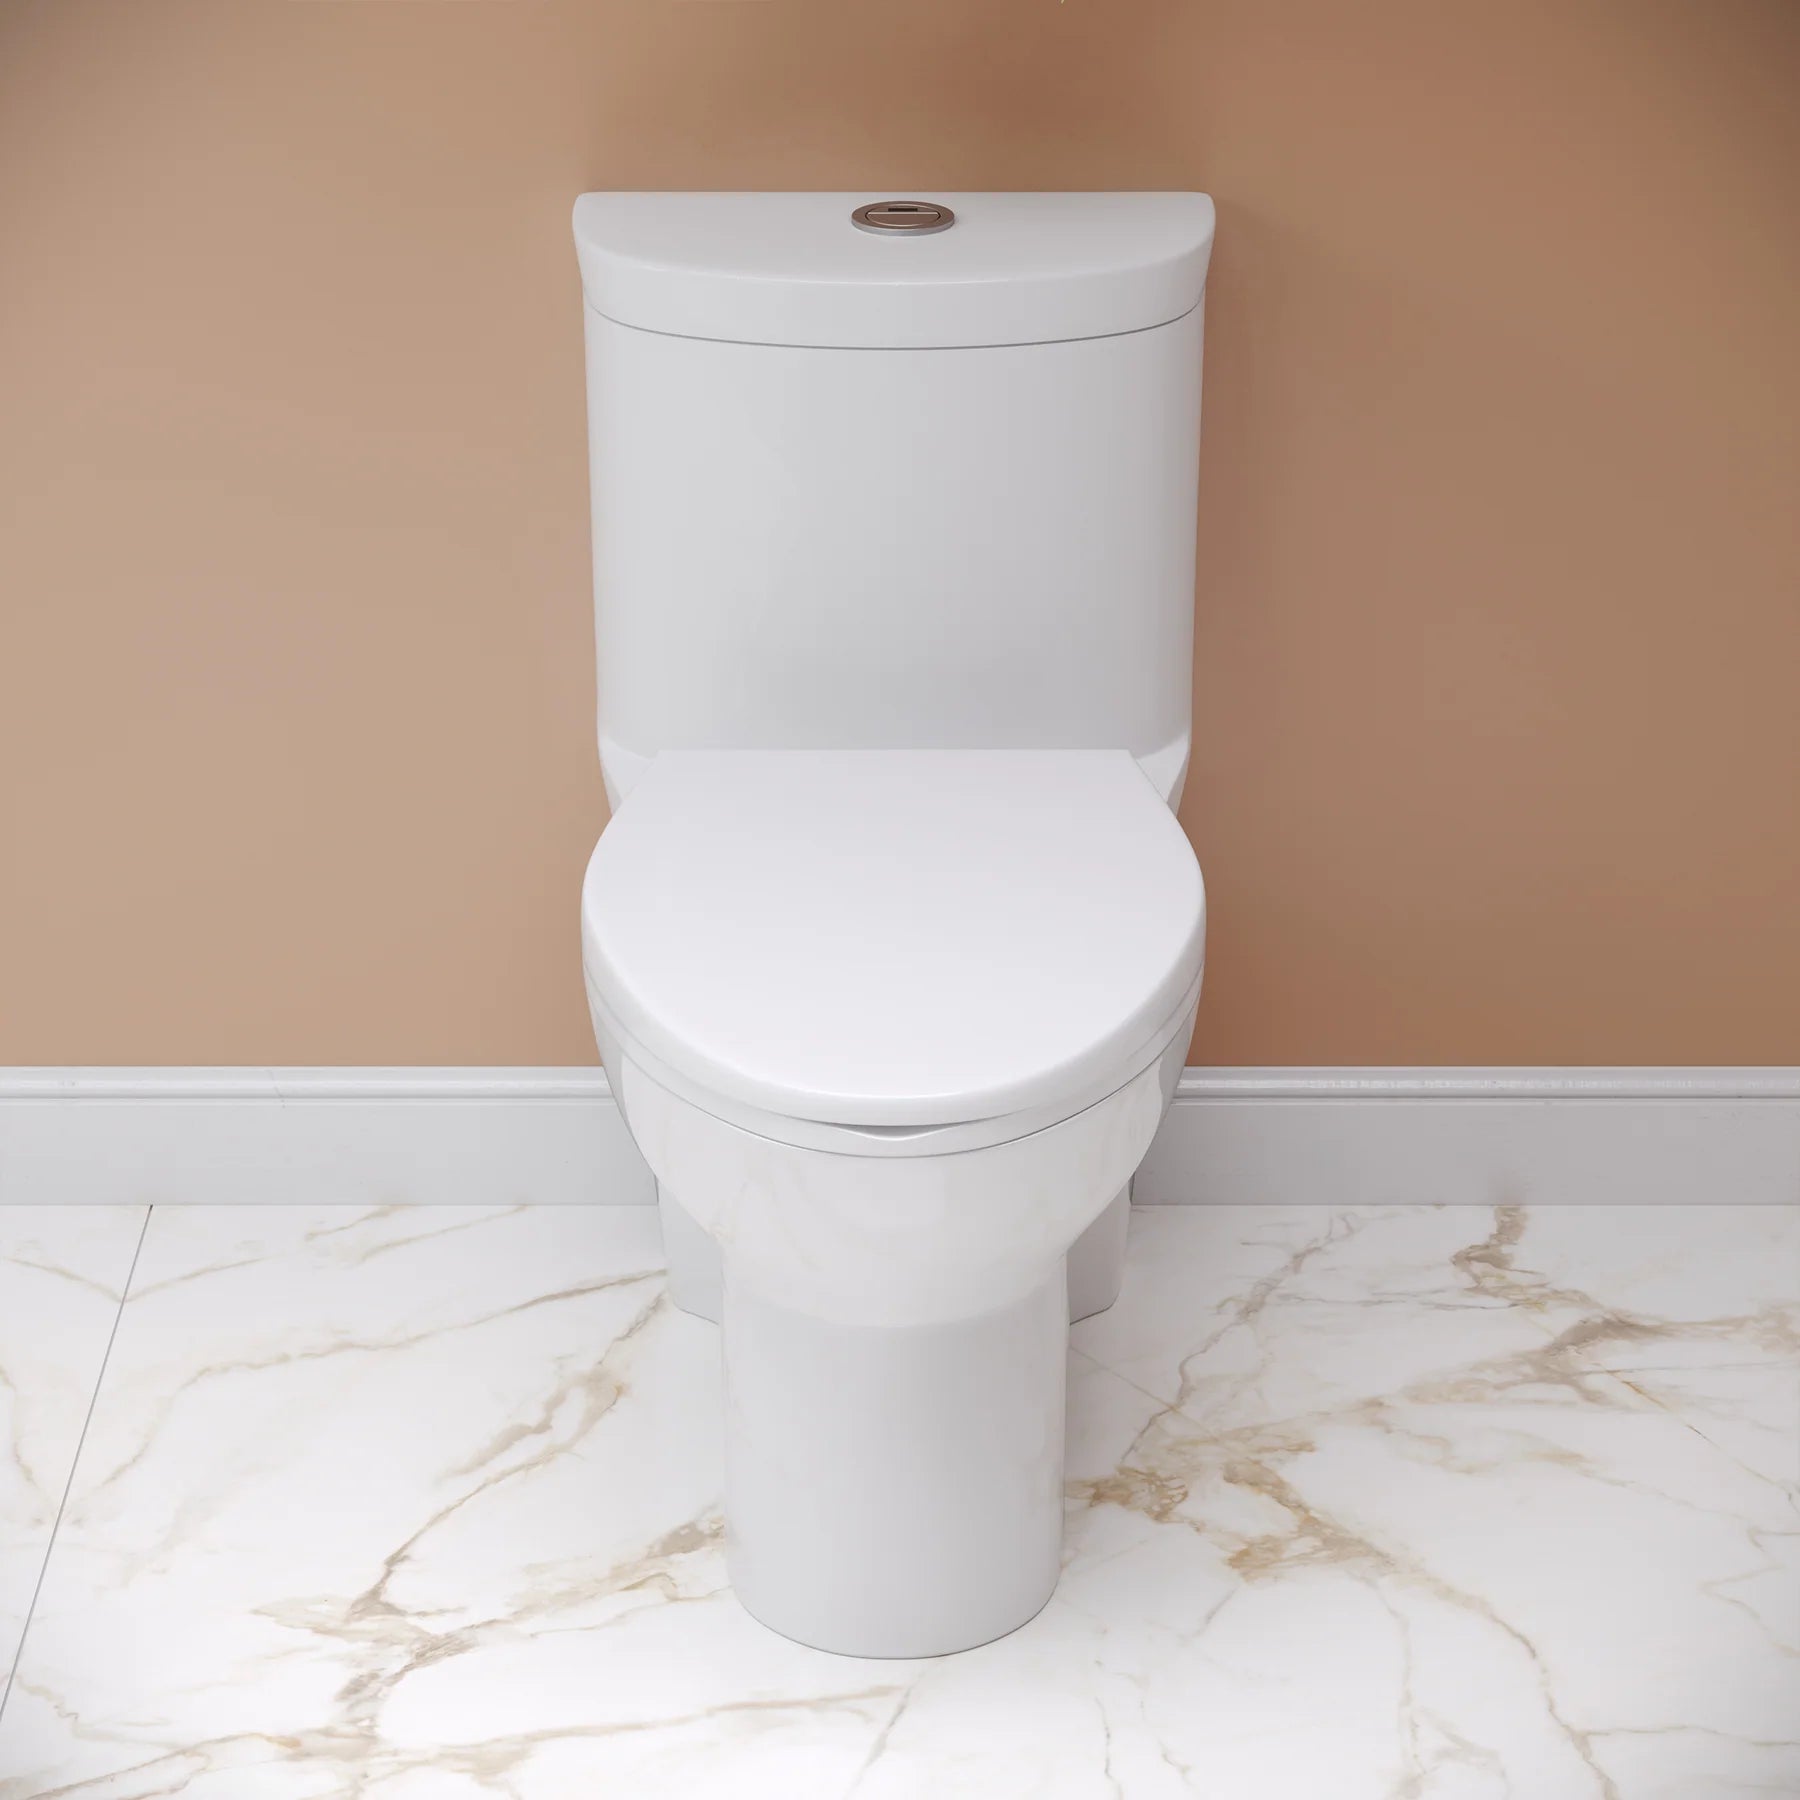 Swiss Madison Sublime One Piece Elongated Toilet with Touchless Retrofit Dual Flush 1.1/1.6 gpf ?- SM-1TK205